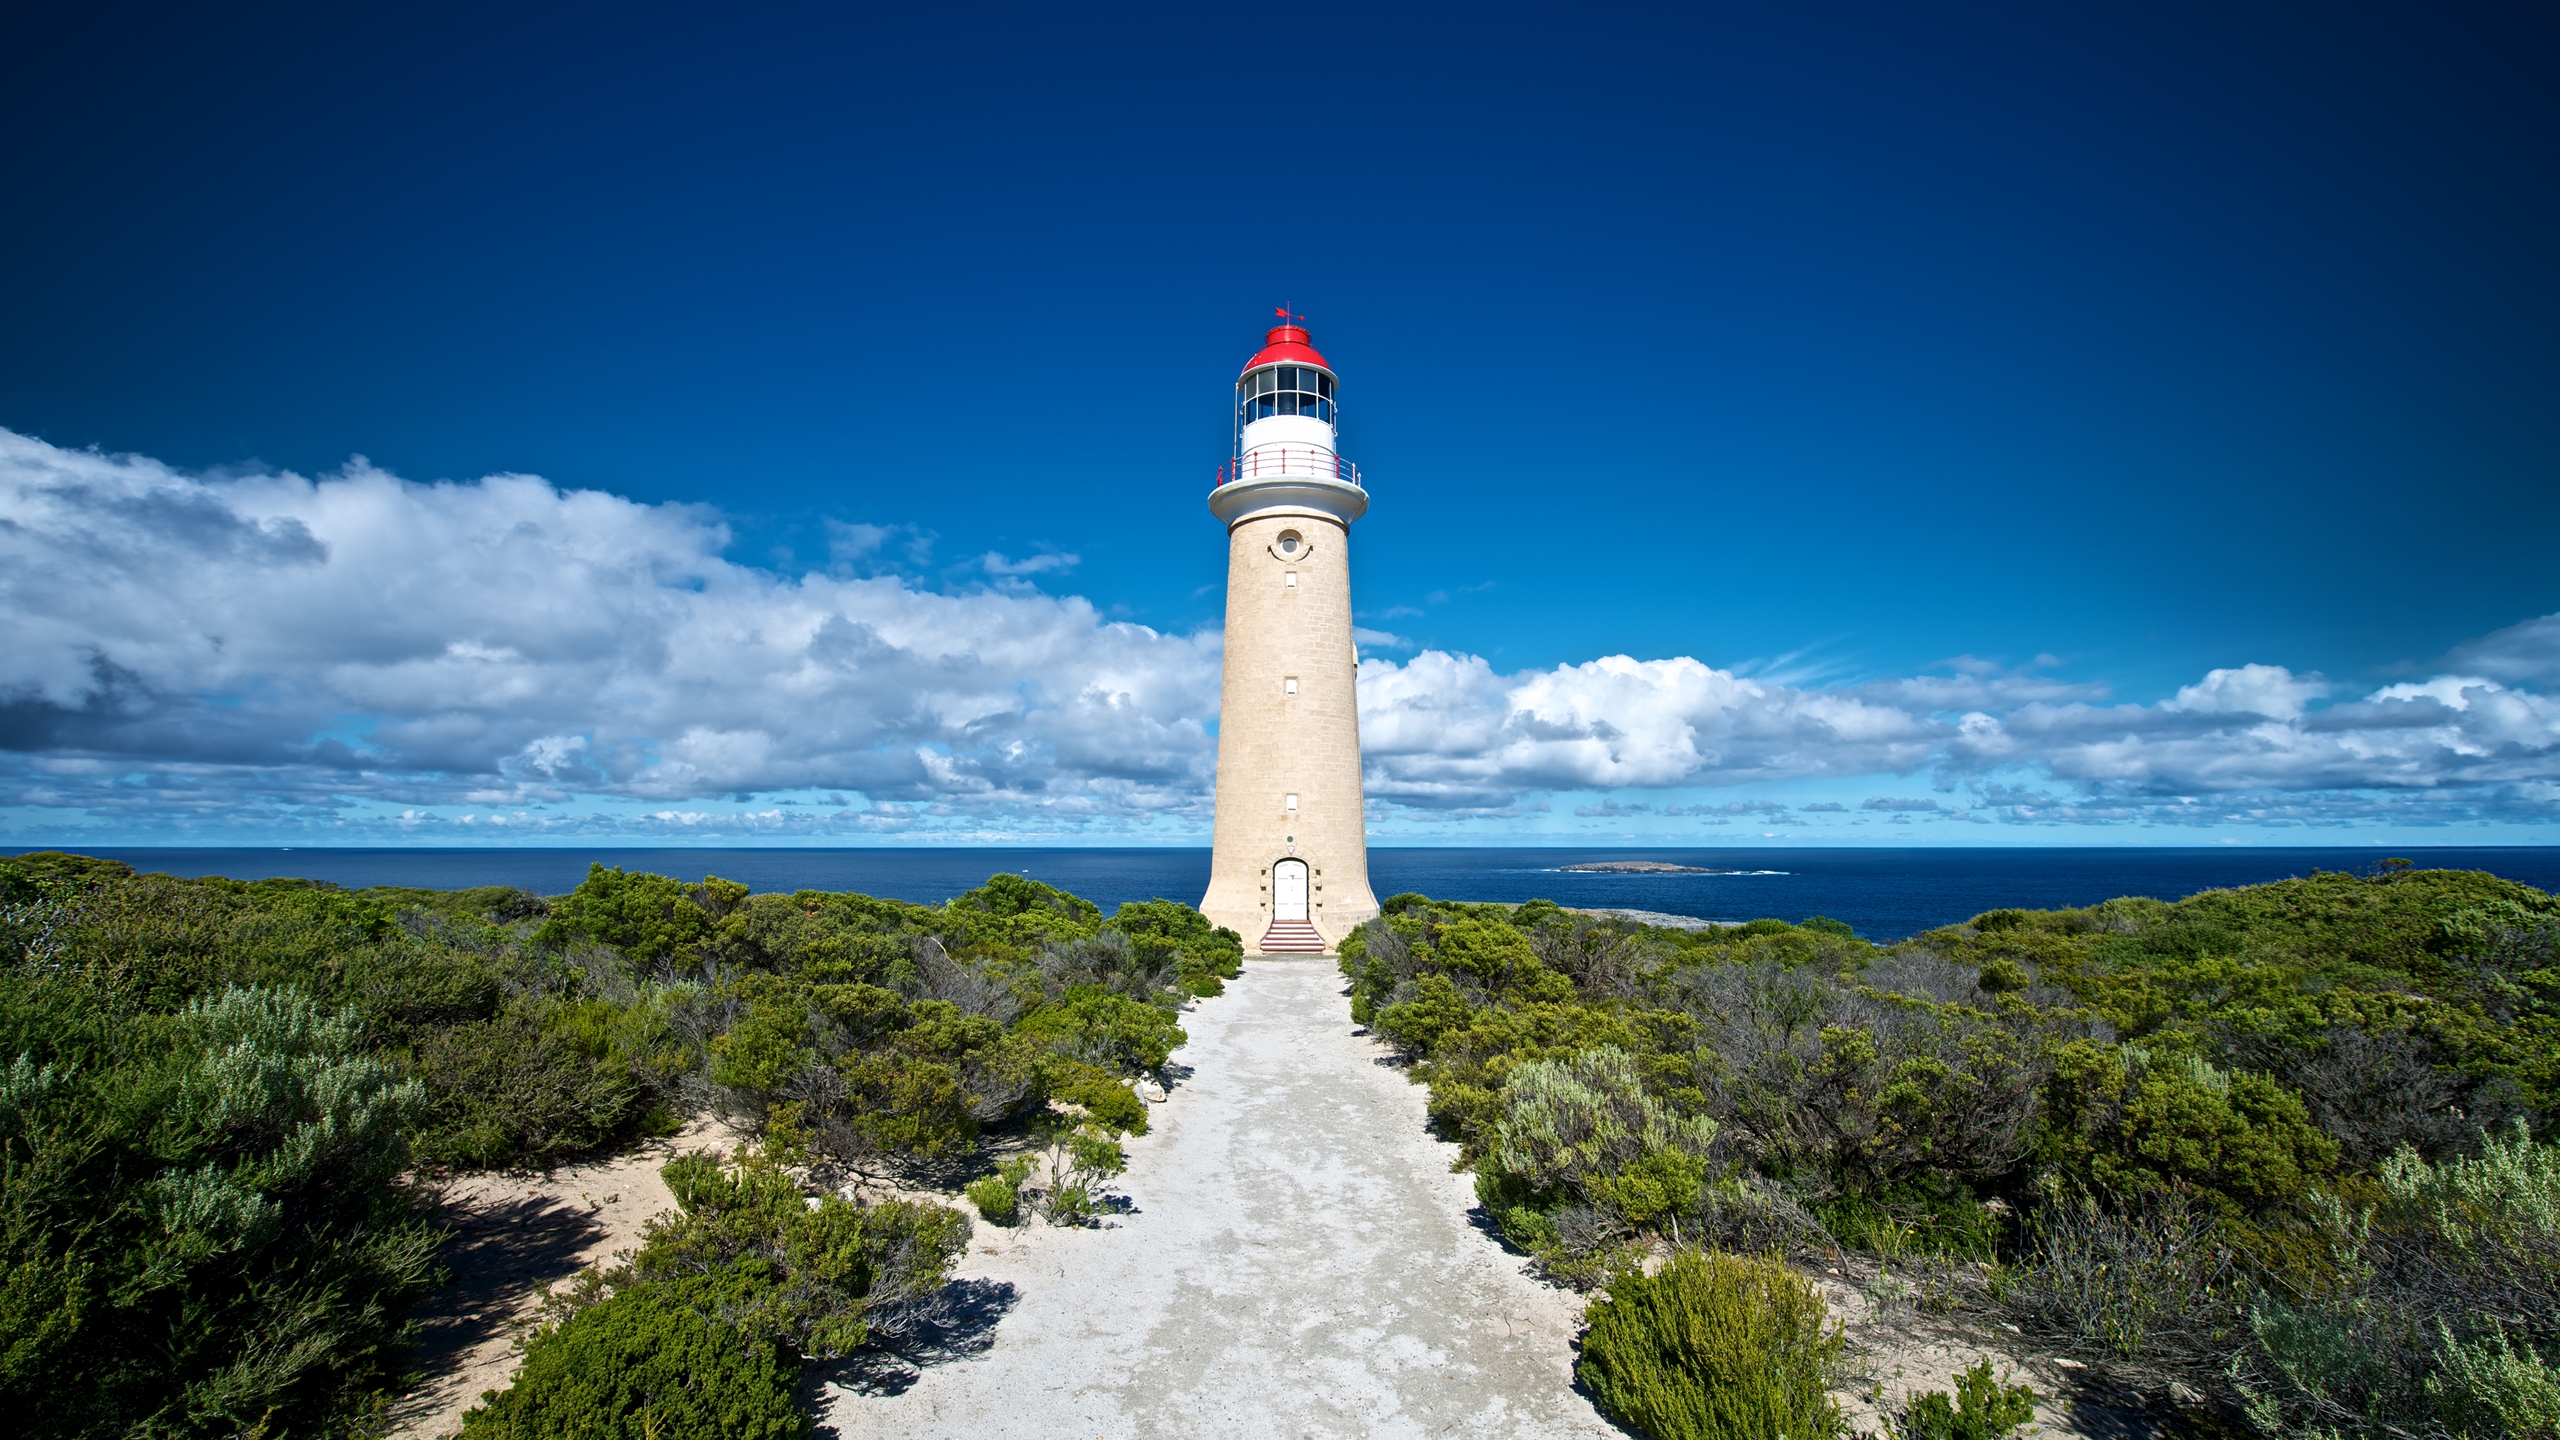 Lighthouse Kangaroo Island for 2560x1440 HDTV resolution